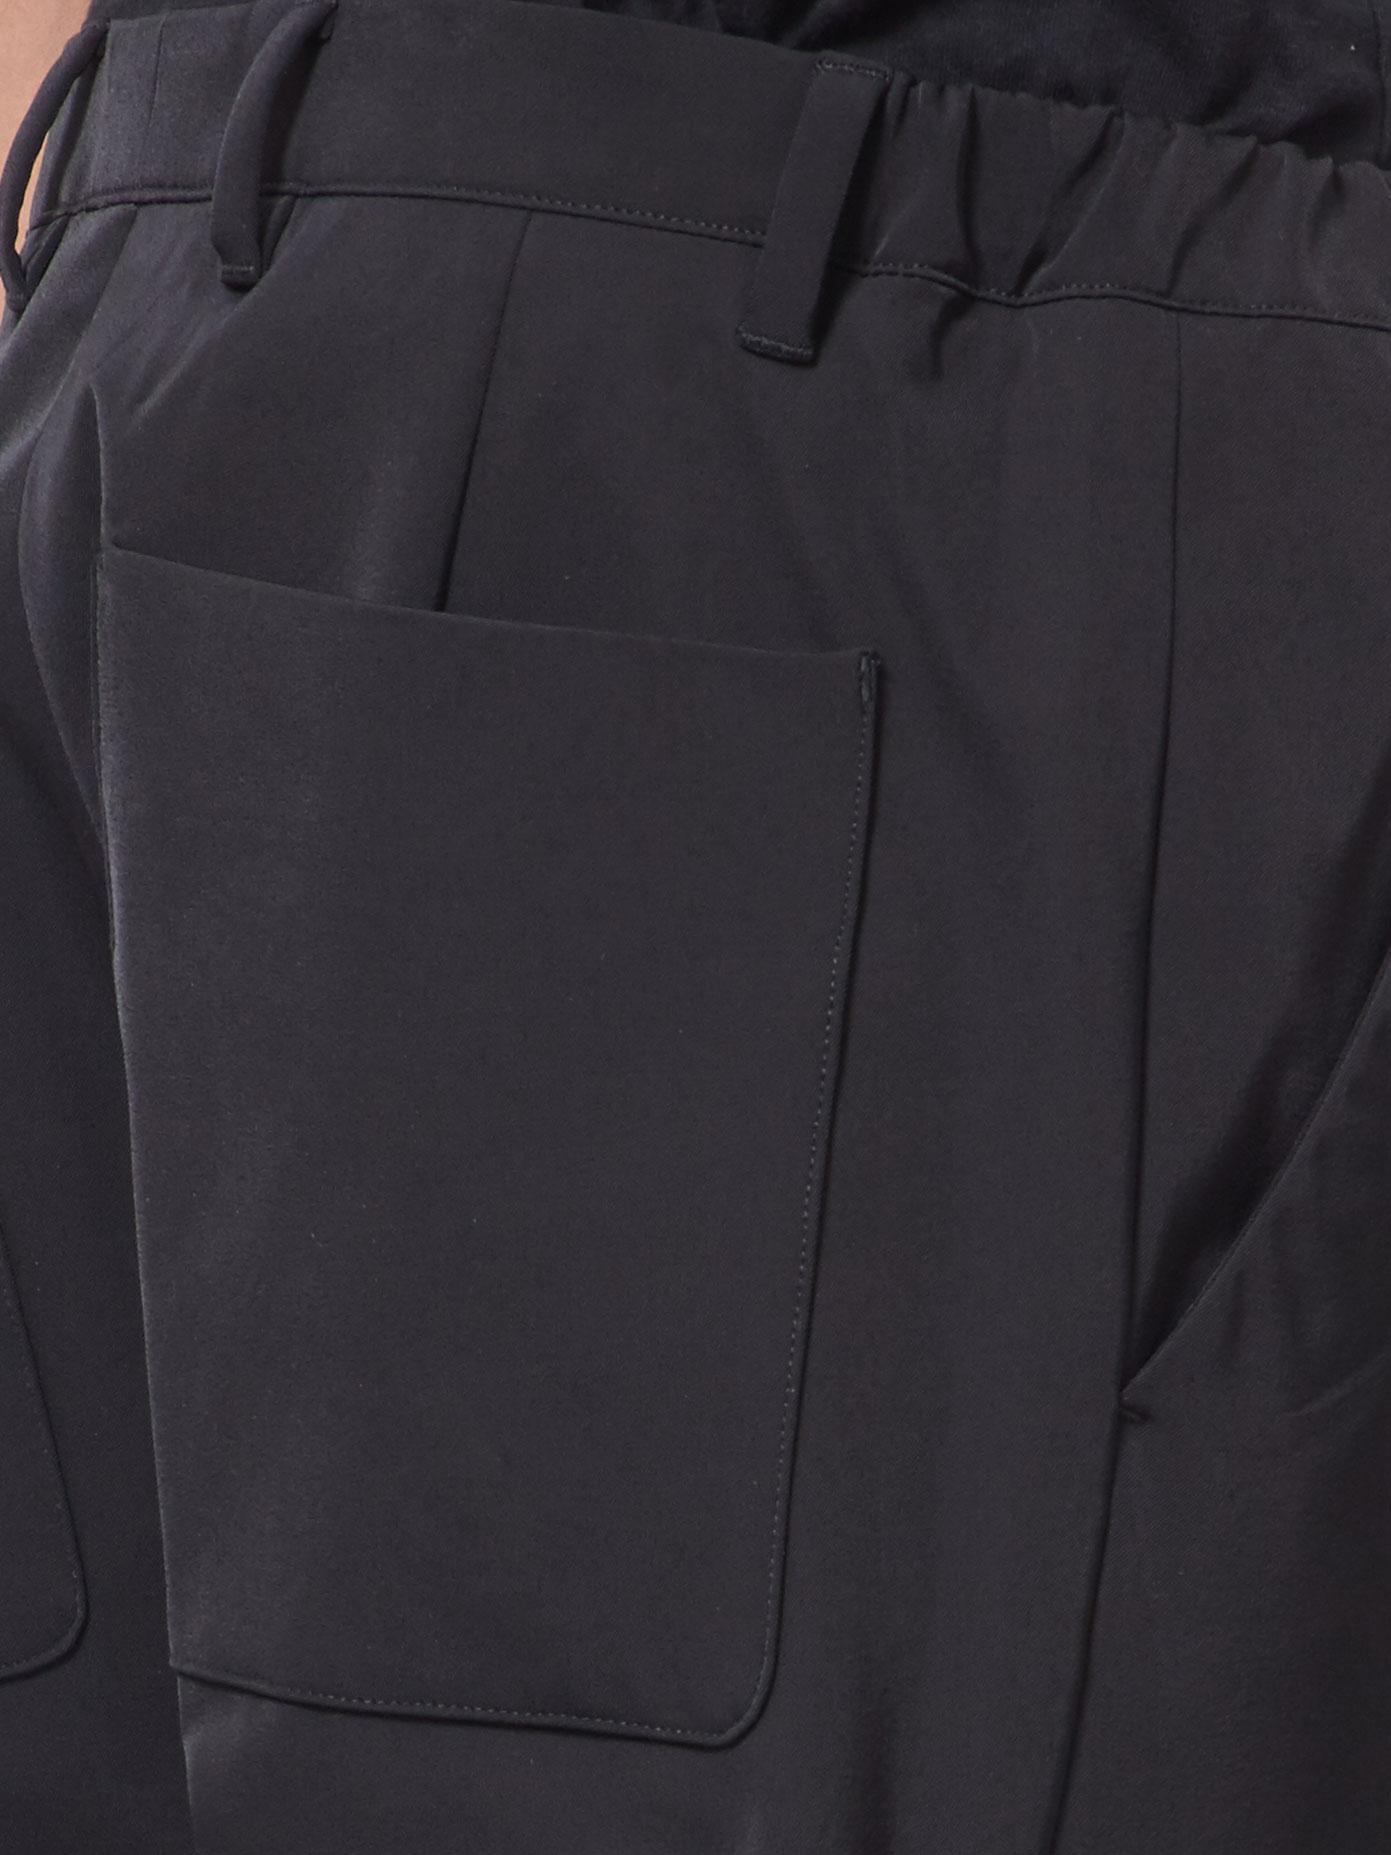 Prada Synthetic Velcro Cuff Techno Stretch Trousers in Black for Men - Lyst